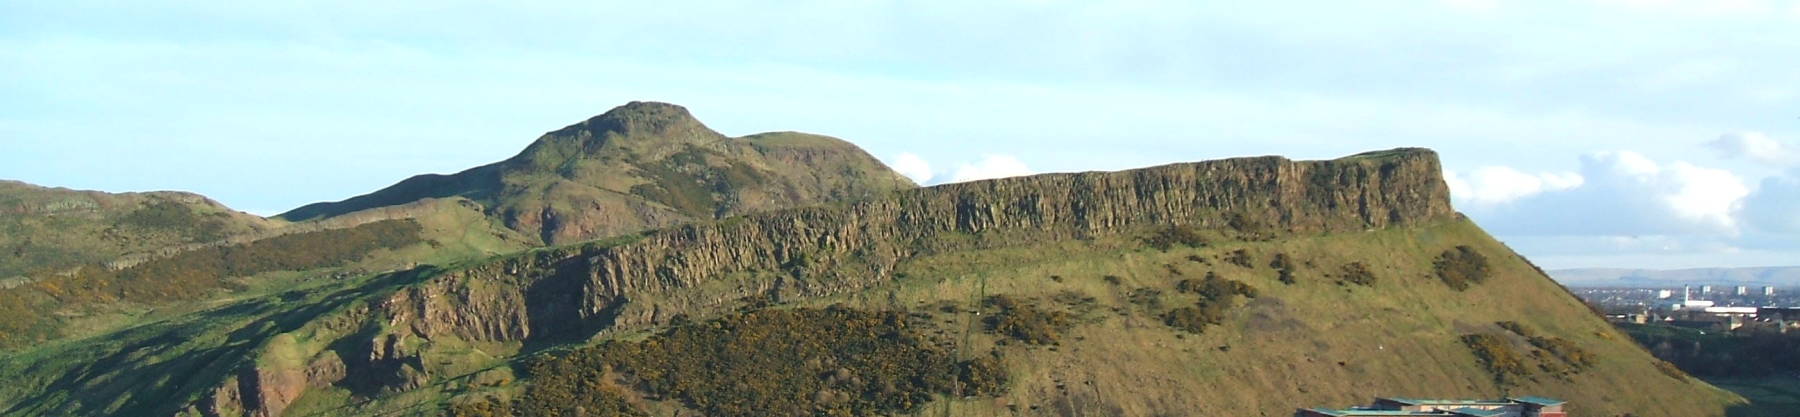 Arthur's Seat, an extinct volcano plug in Edinburgh.